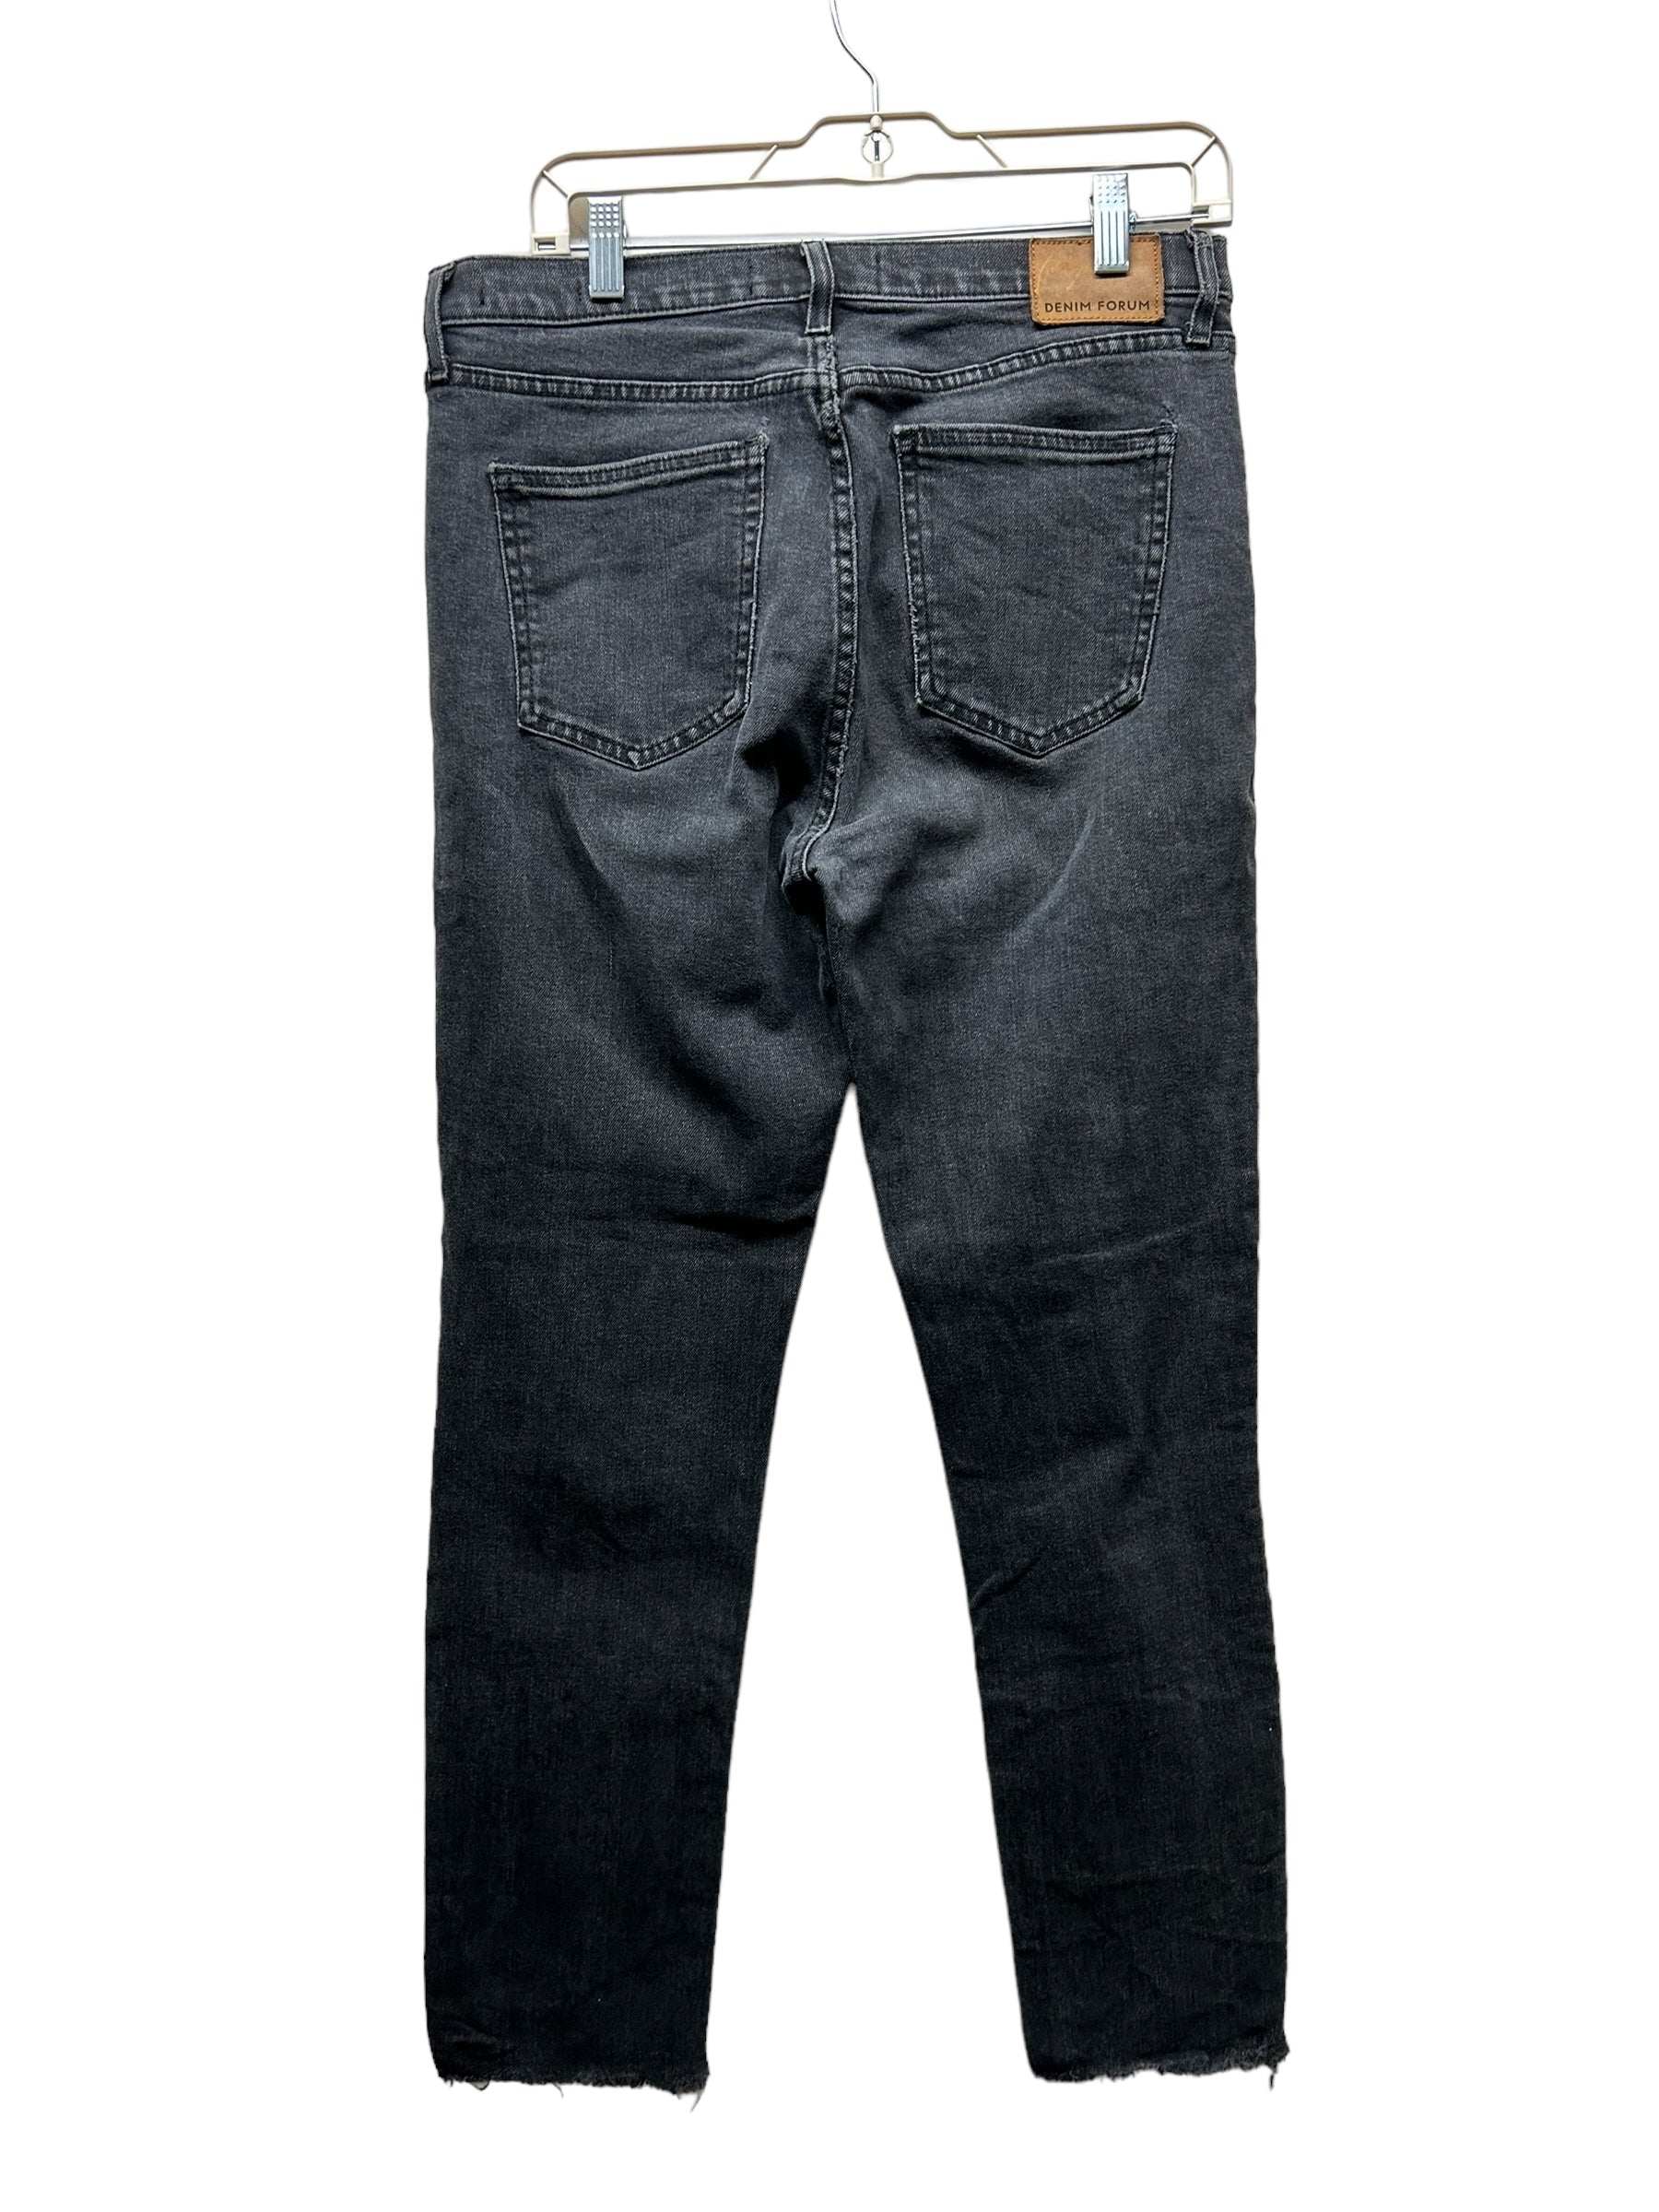 Aritzia Denim Forum High Rise Jeans (40)